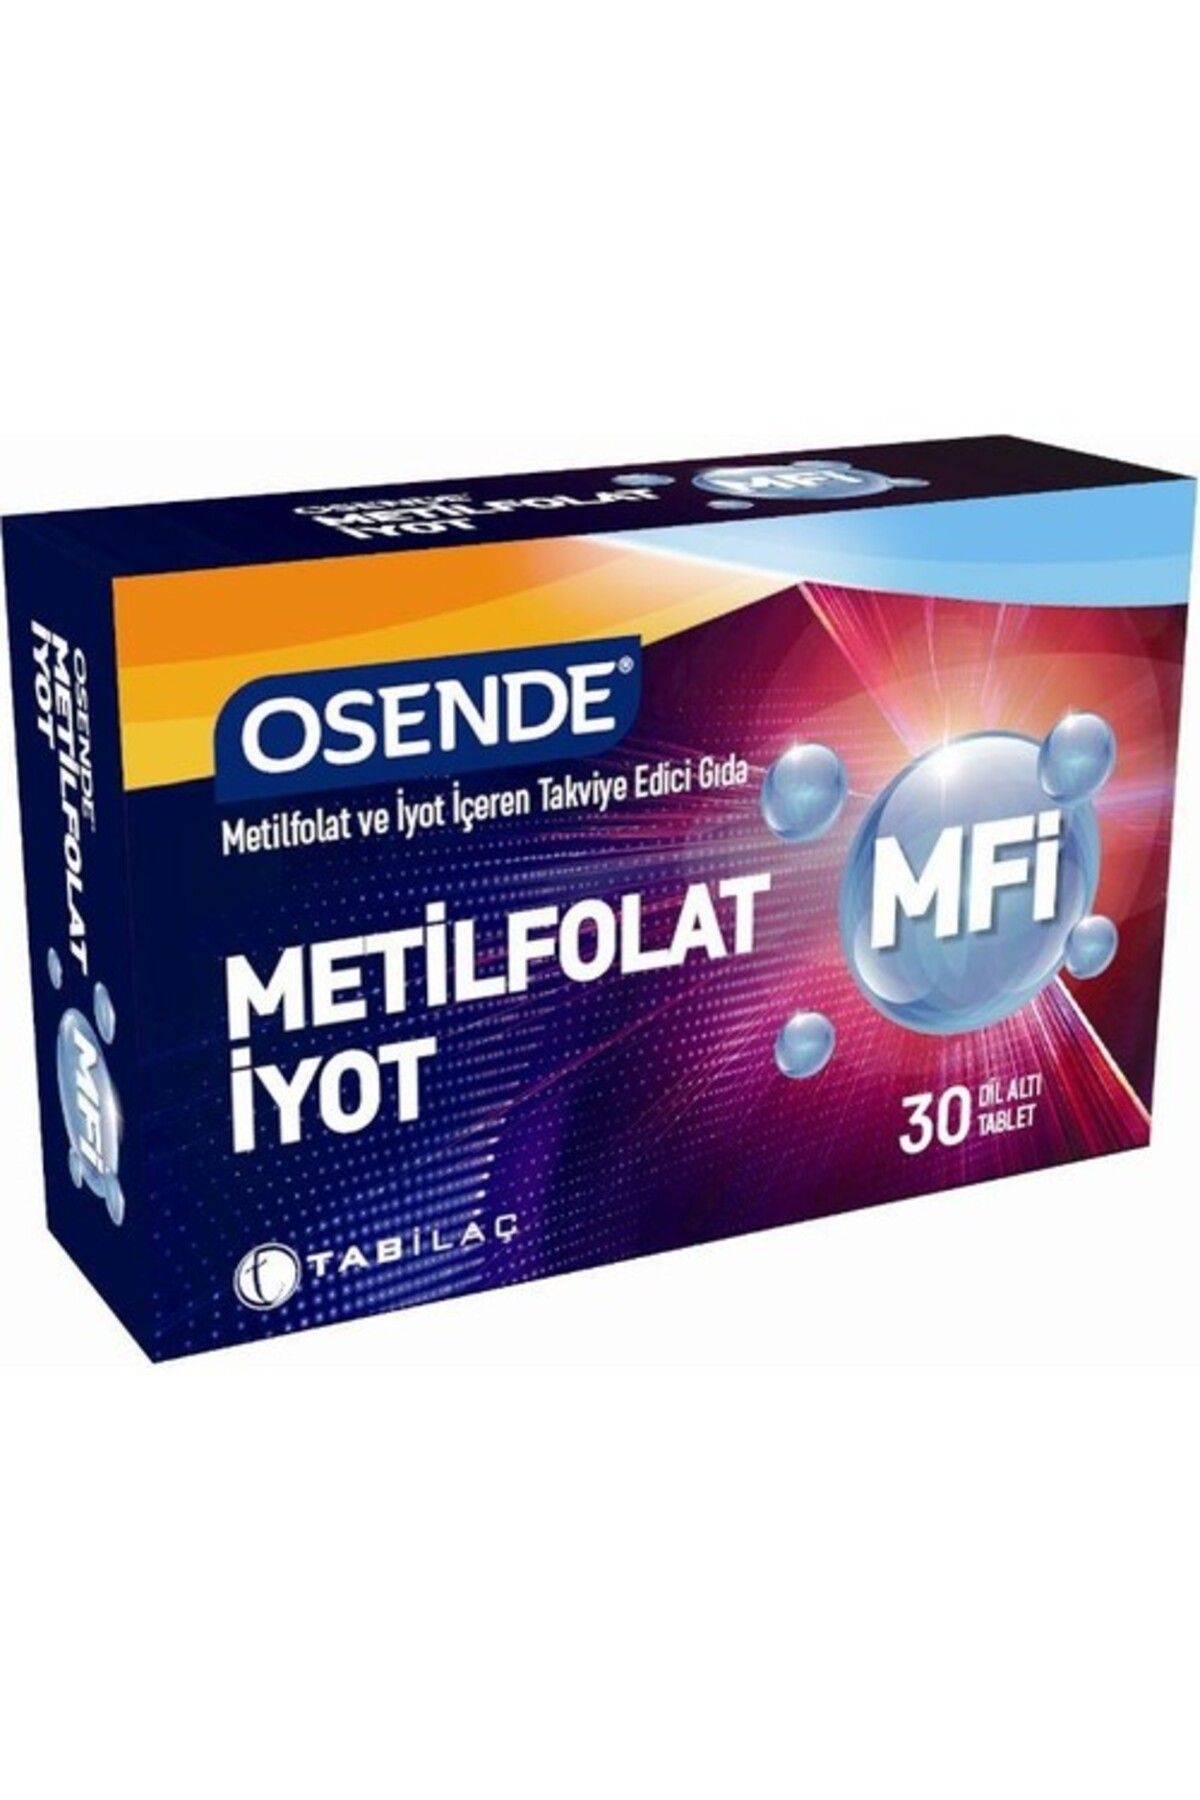 Osende Metilfolat & Iyot 30 Dil Altı Tableti